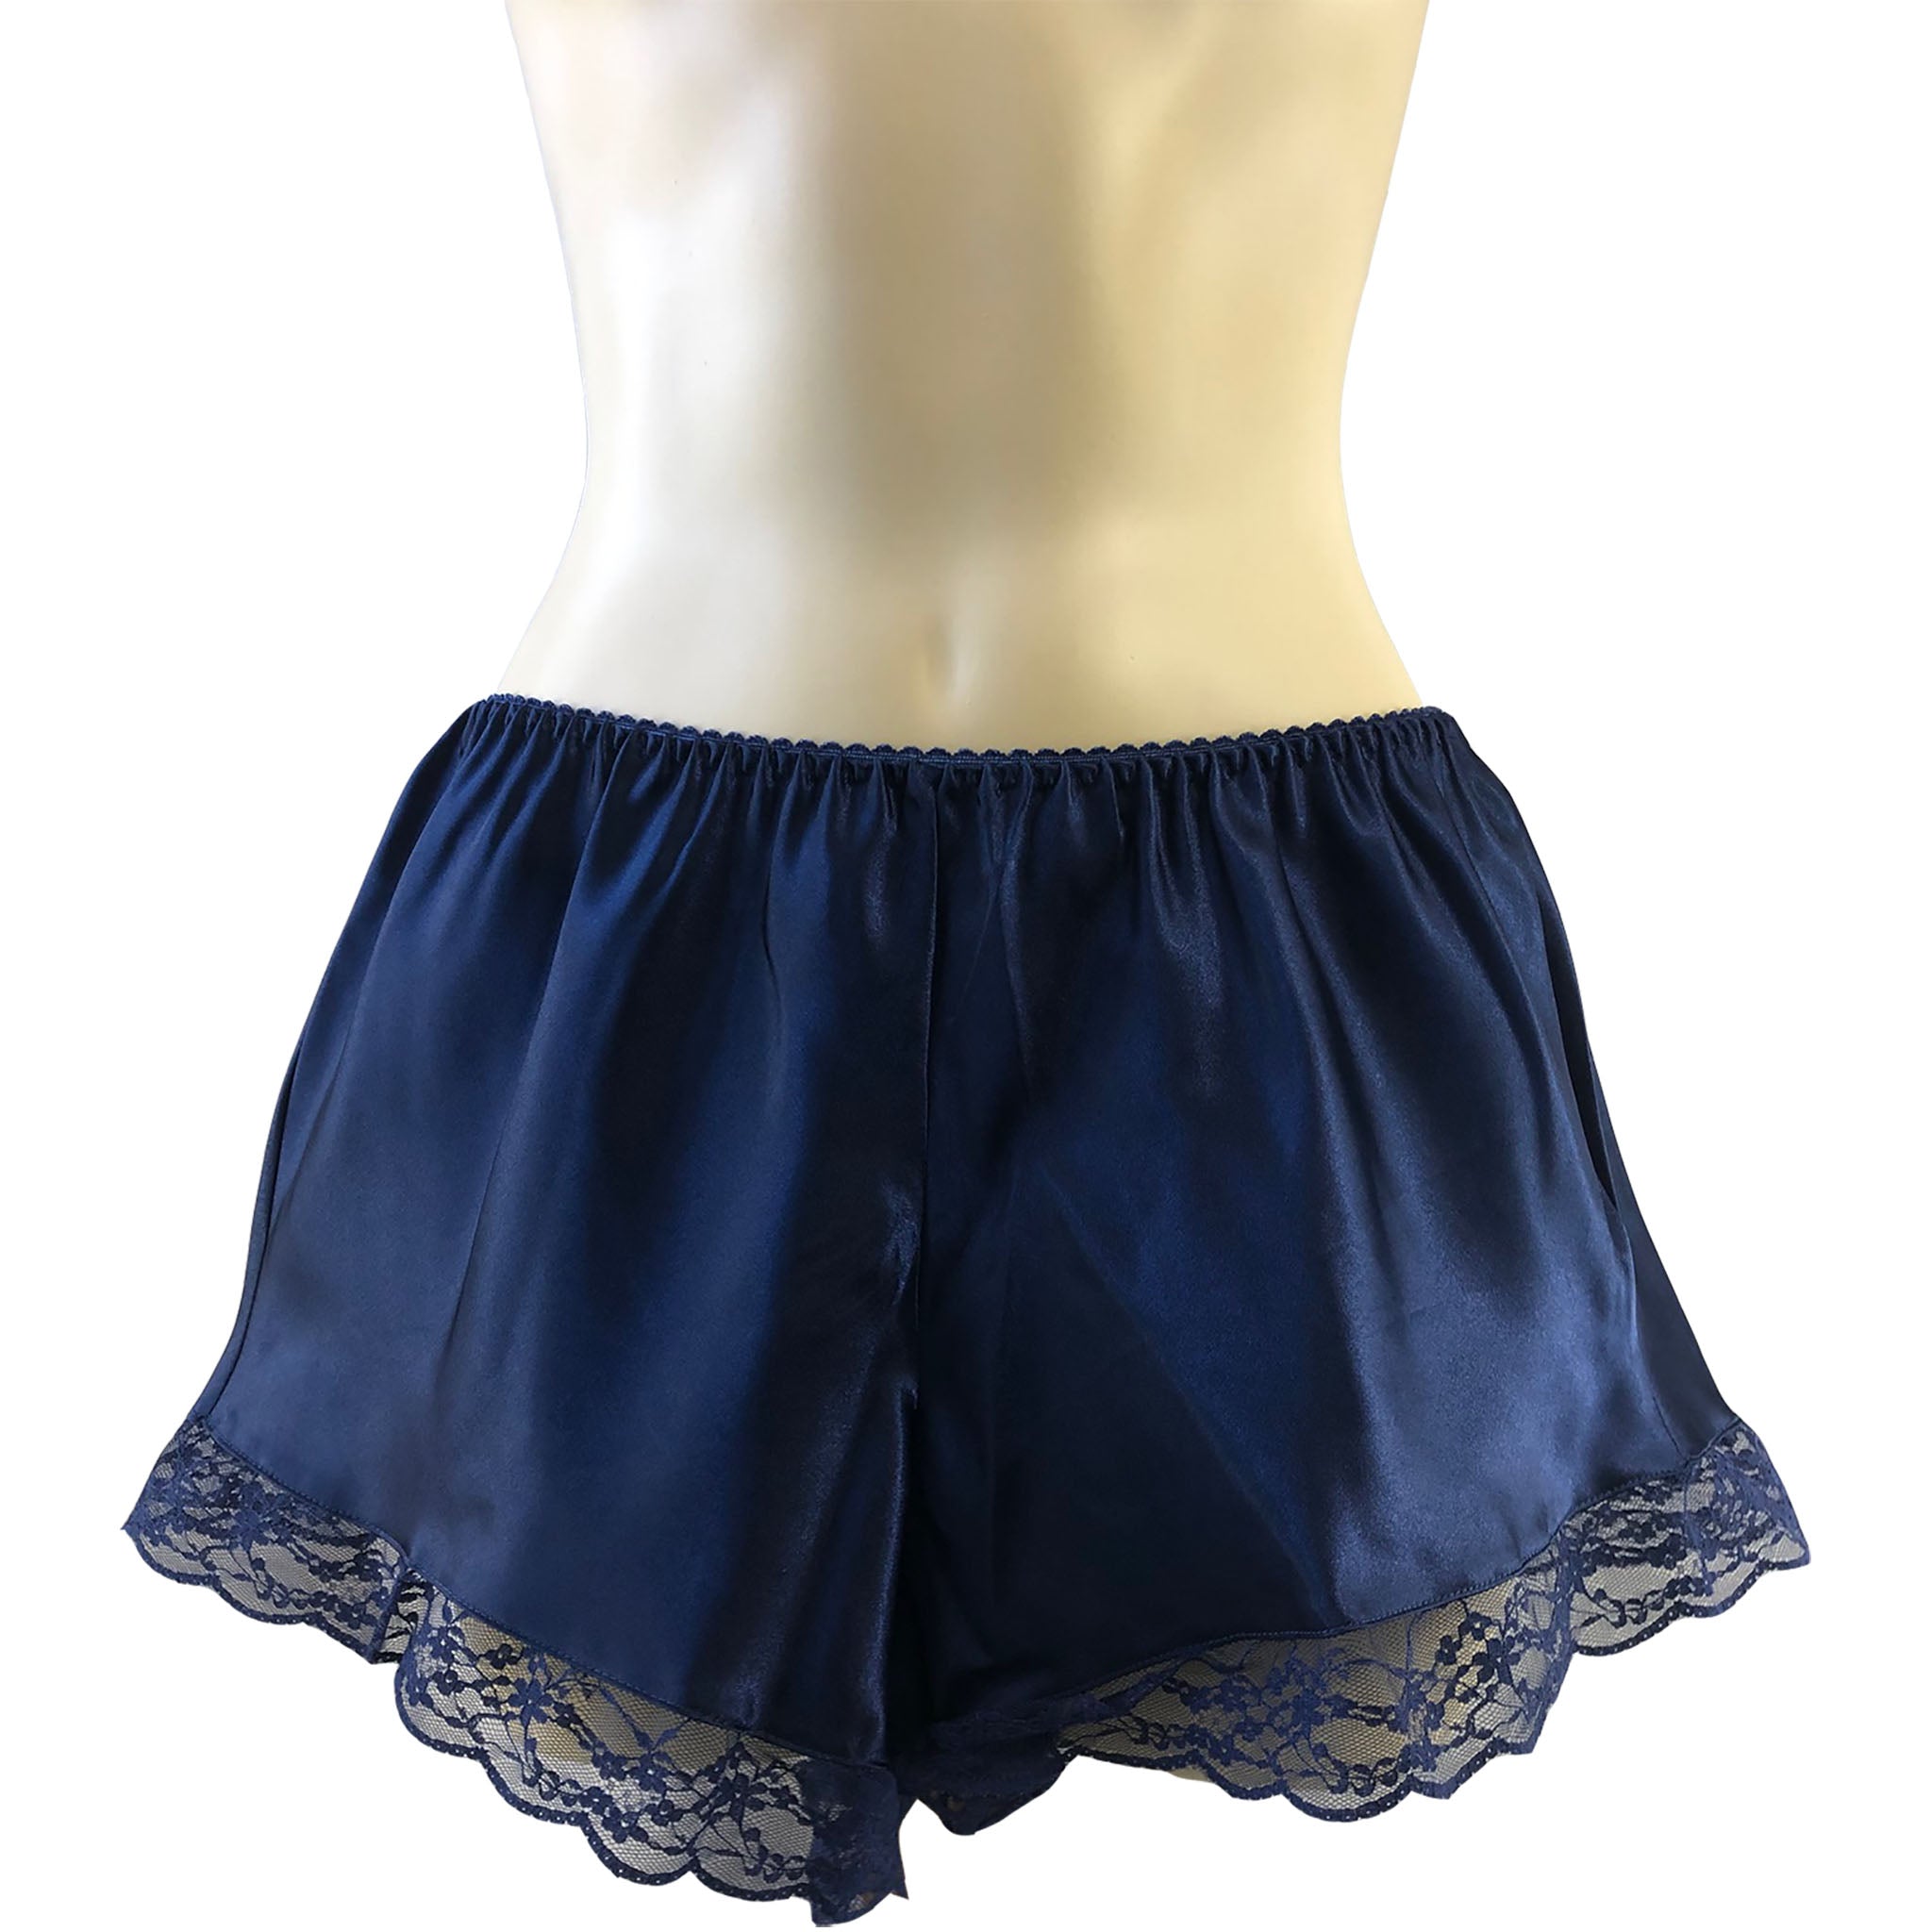 Light blue lacy underwear on shiny white silky fabric Stock Photo